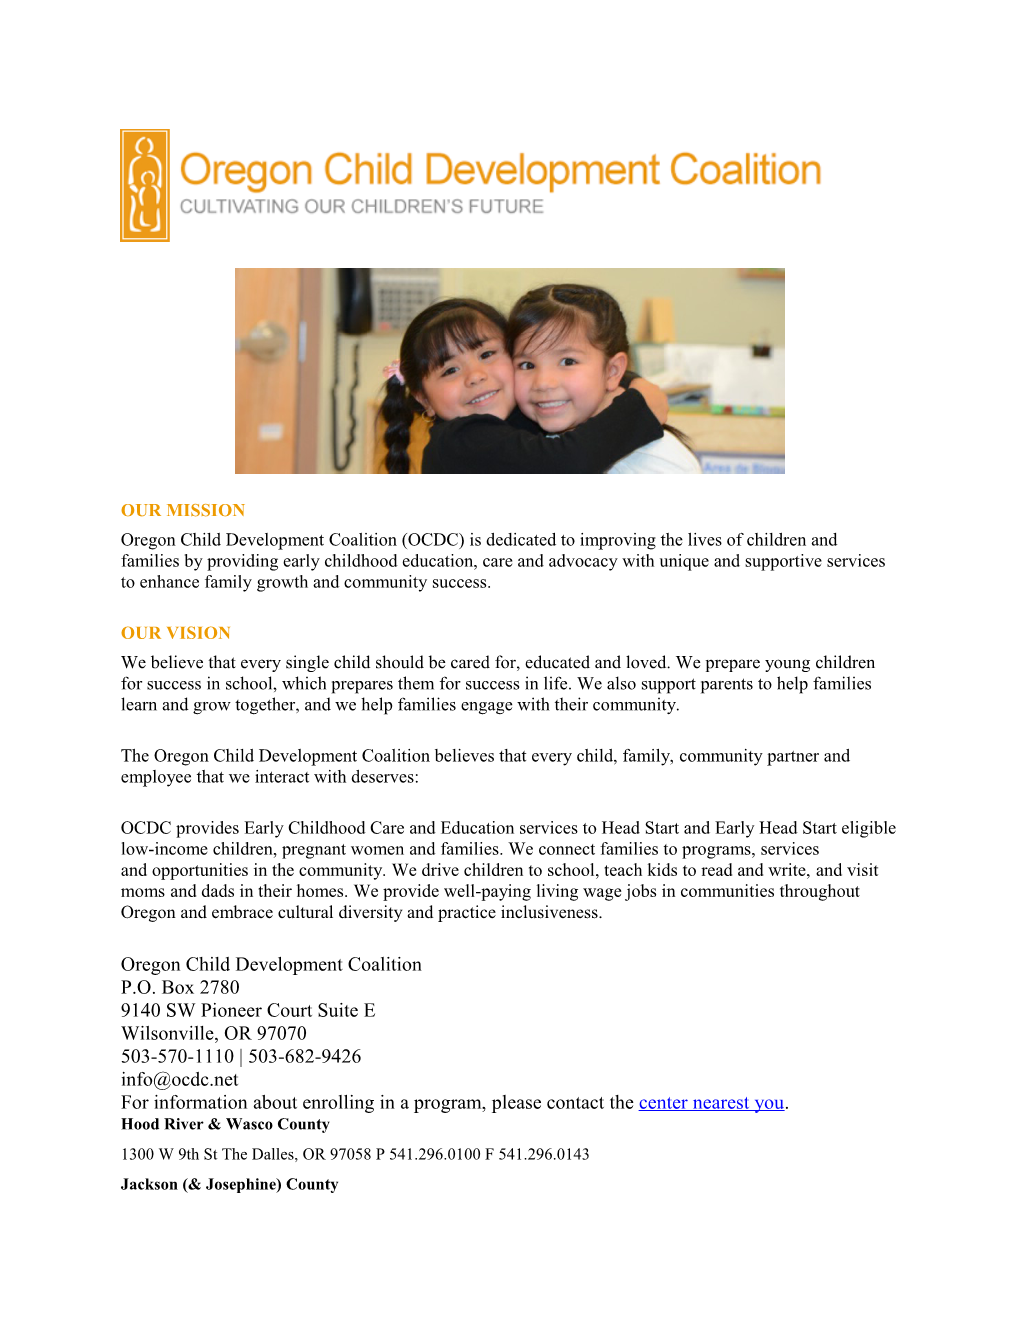 Oregon Child Development Coalition Summary Sheet